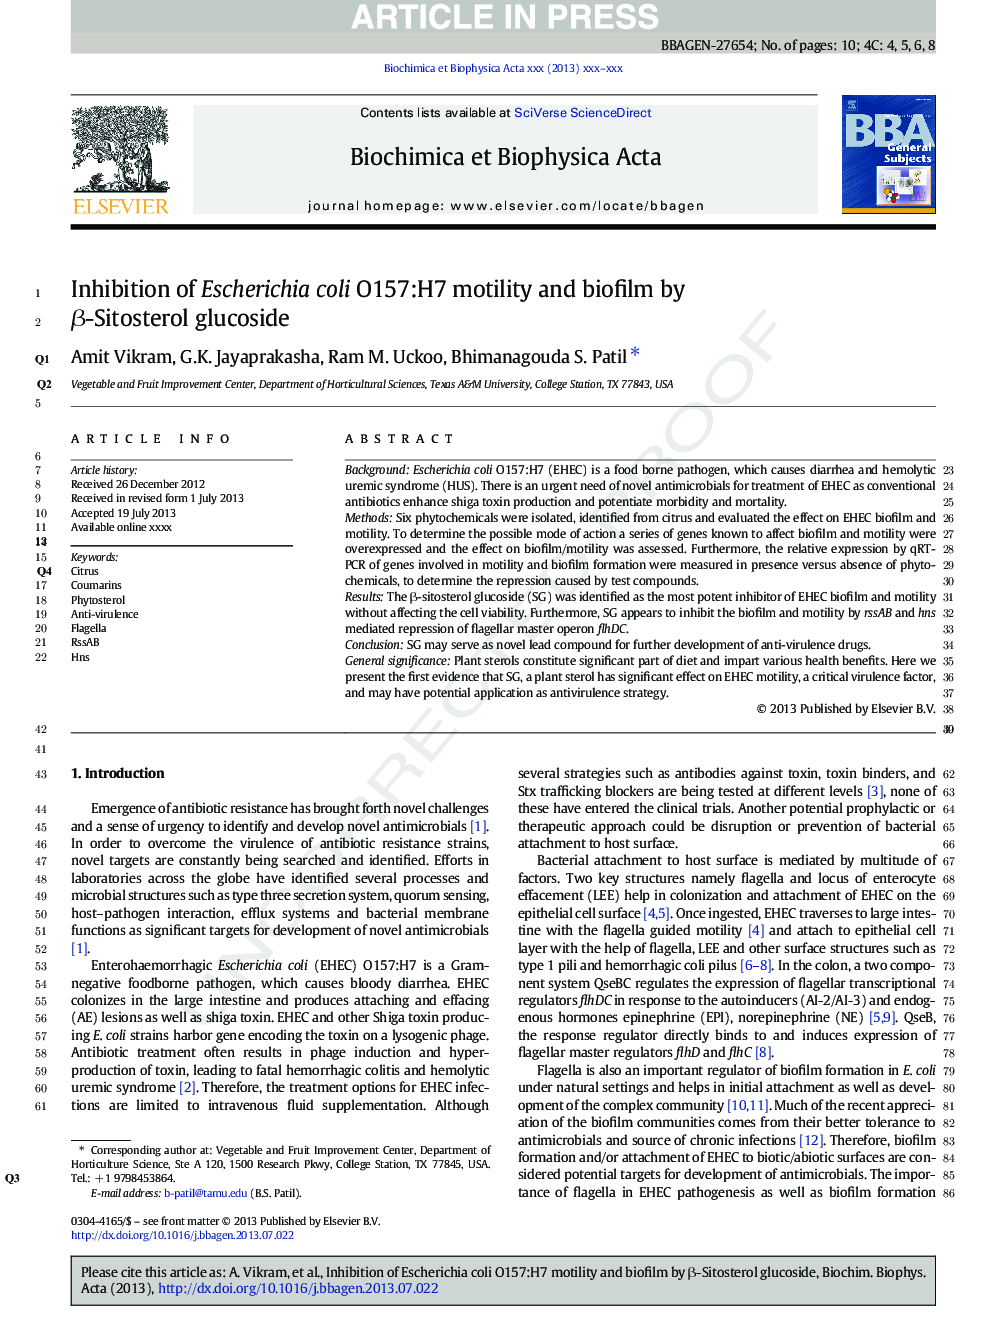 Inhibition of Escherichia coli O157:H7 motility and biofilm by Î²-Sitosterol glucoside